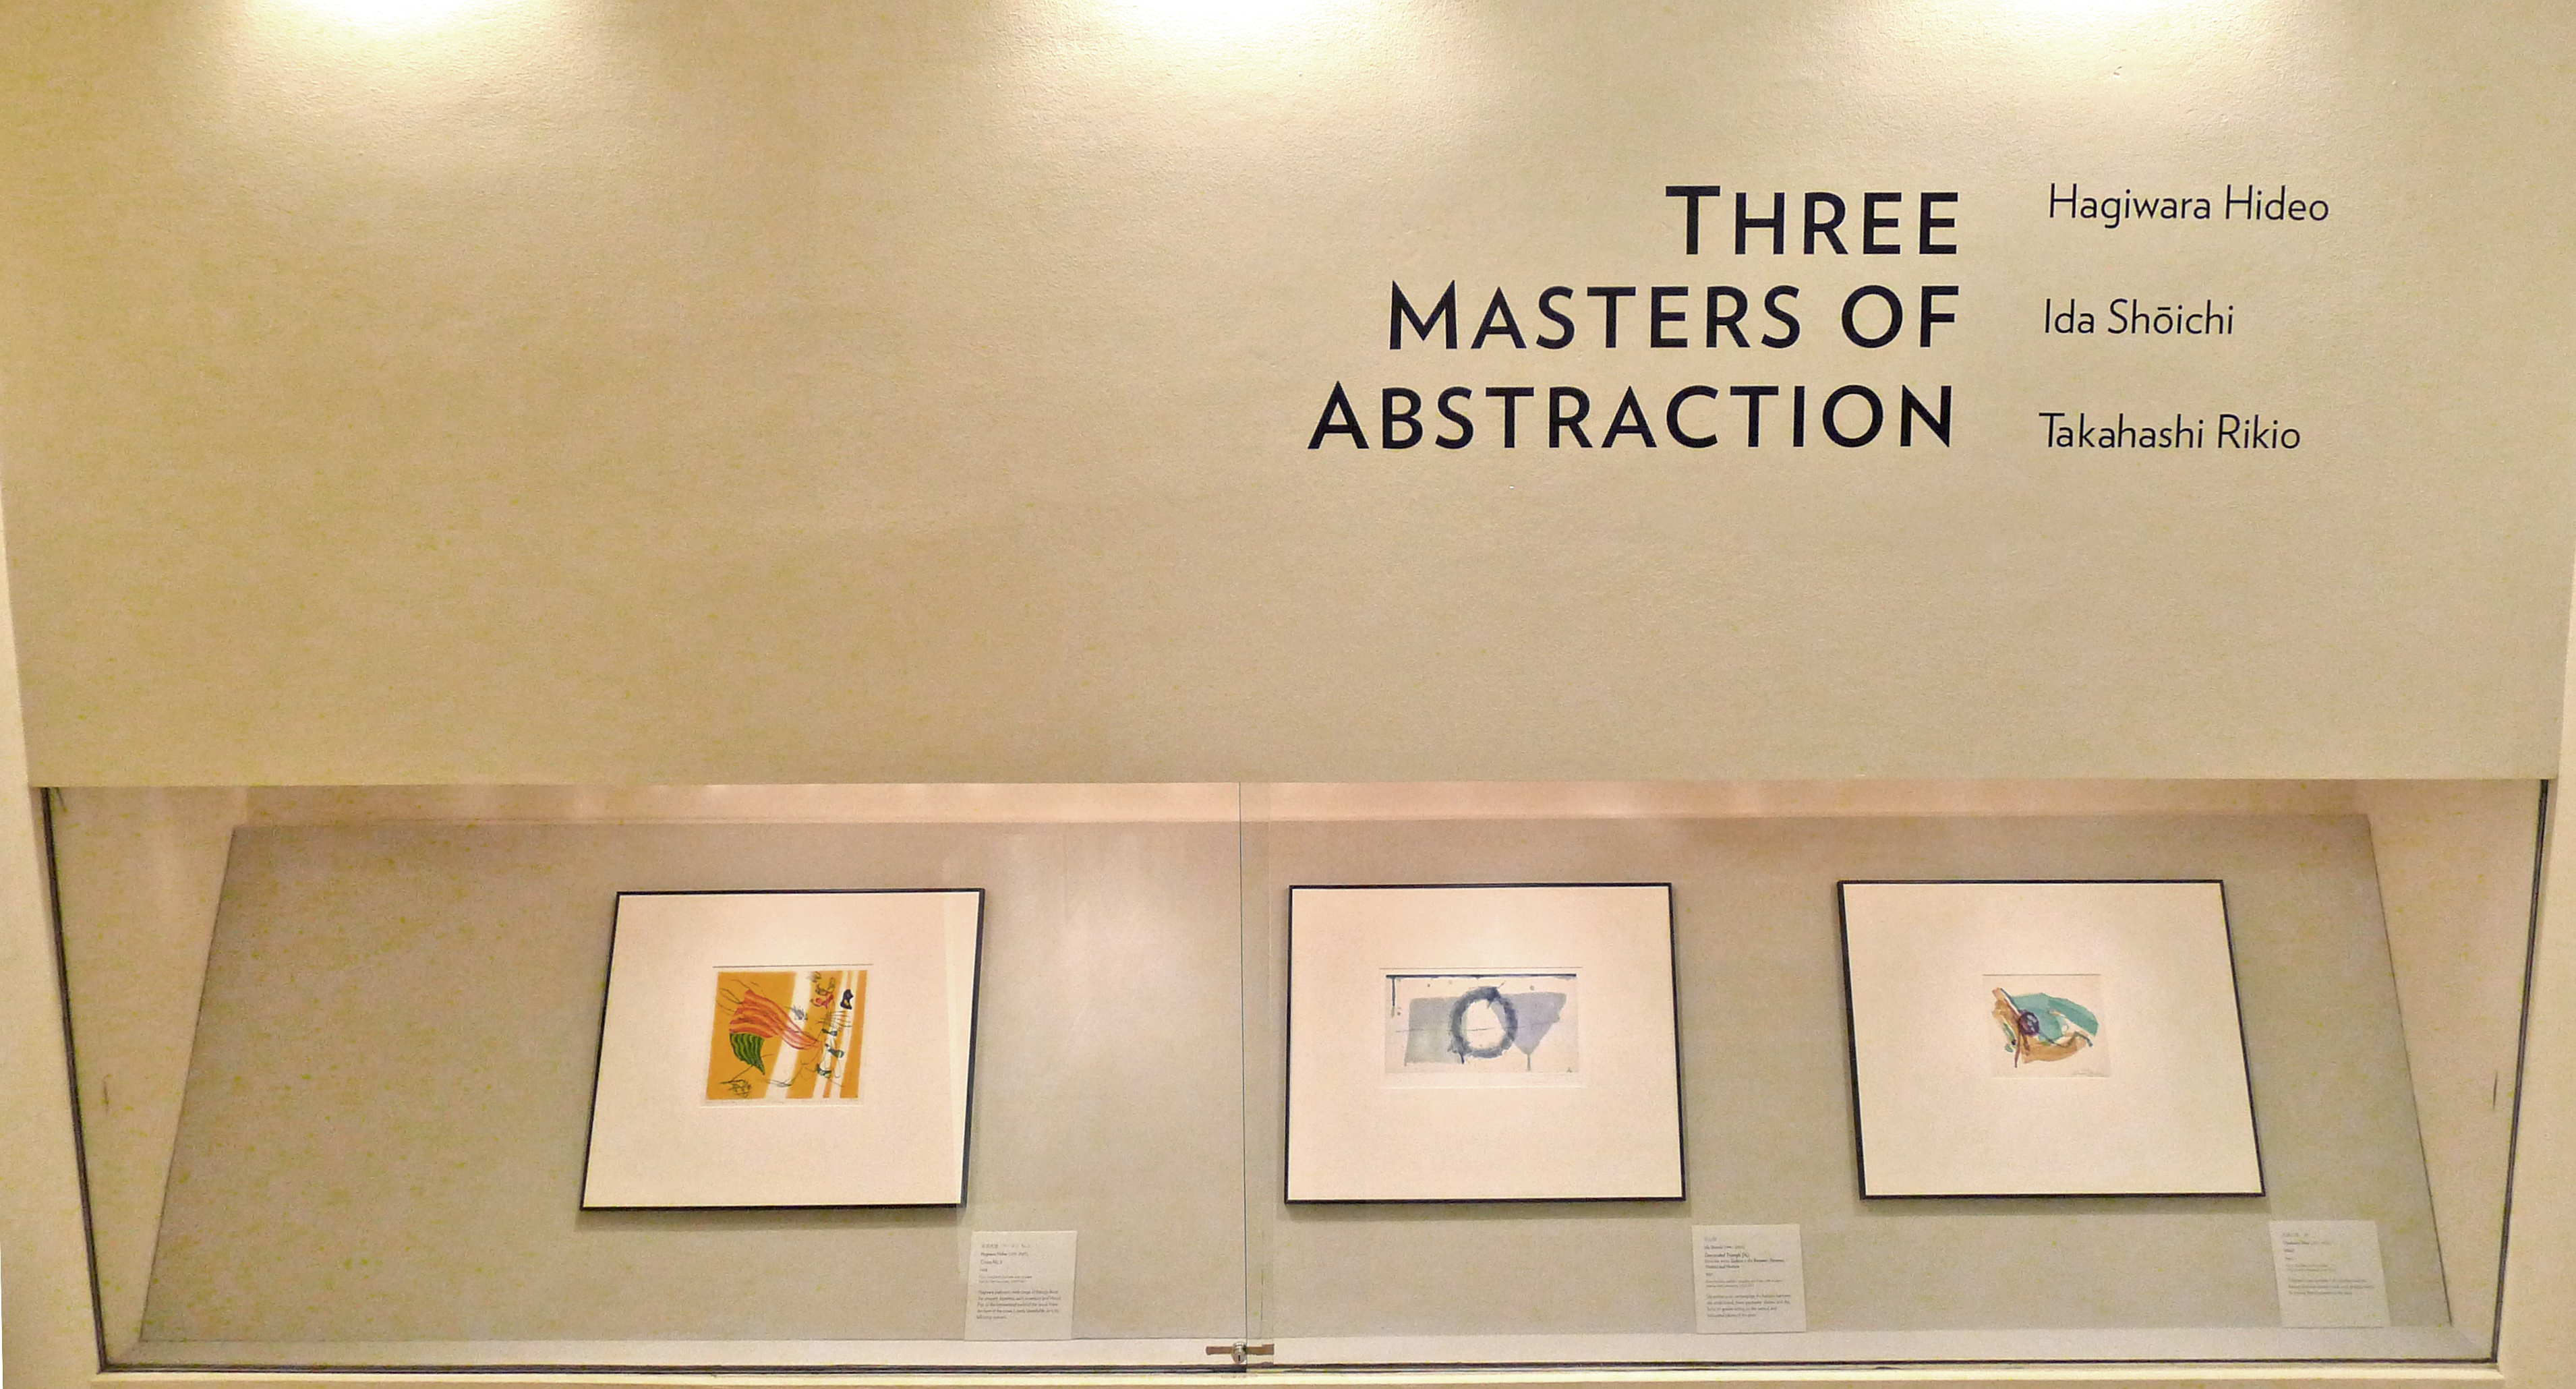 https://sites.google.com/a/myjapanesehanga.com/www/home/three-masters-of-abstraction-hagiwara-hideo-ida-shoichi-and-takahashi-rikio/photographs-from-the-exhibition